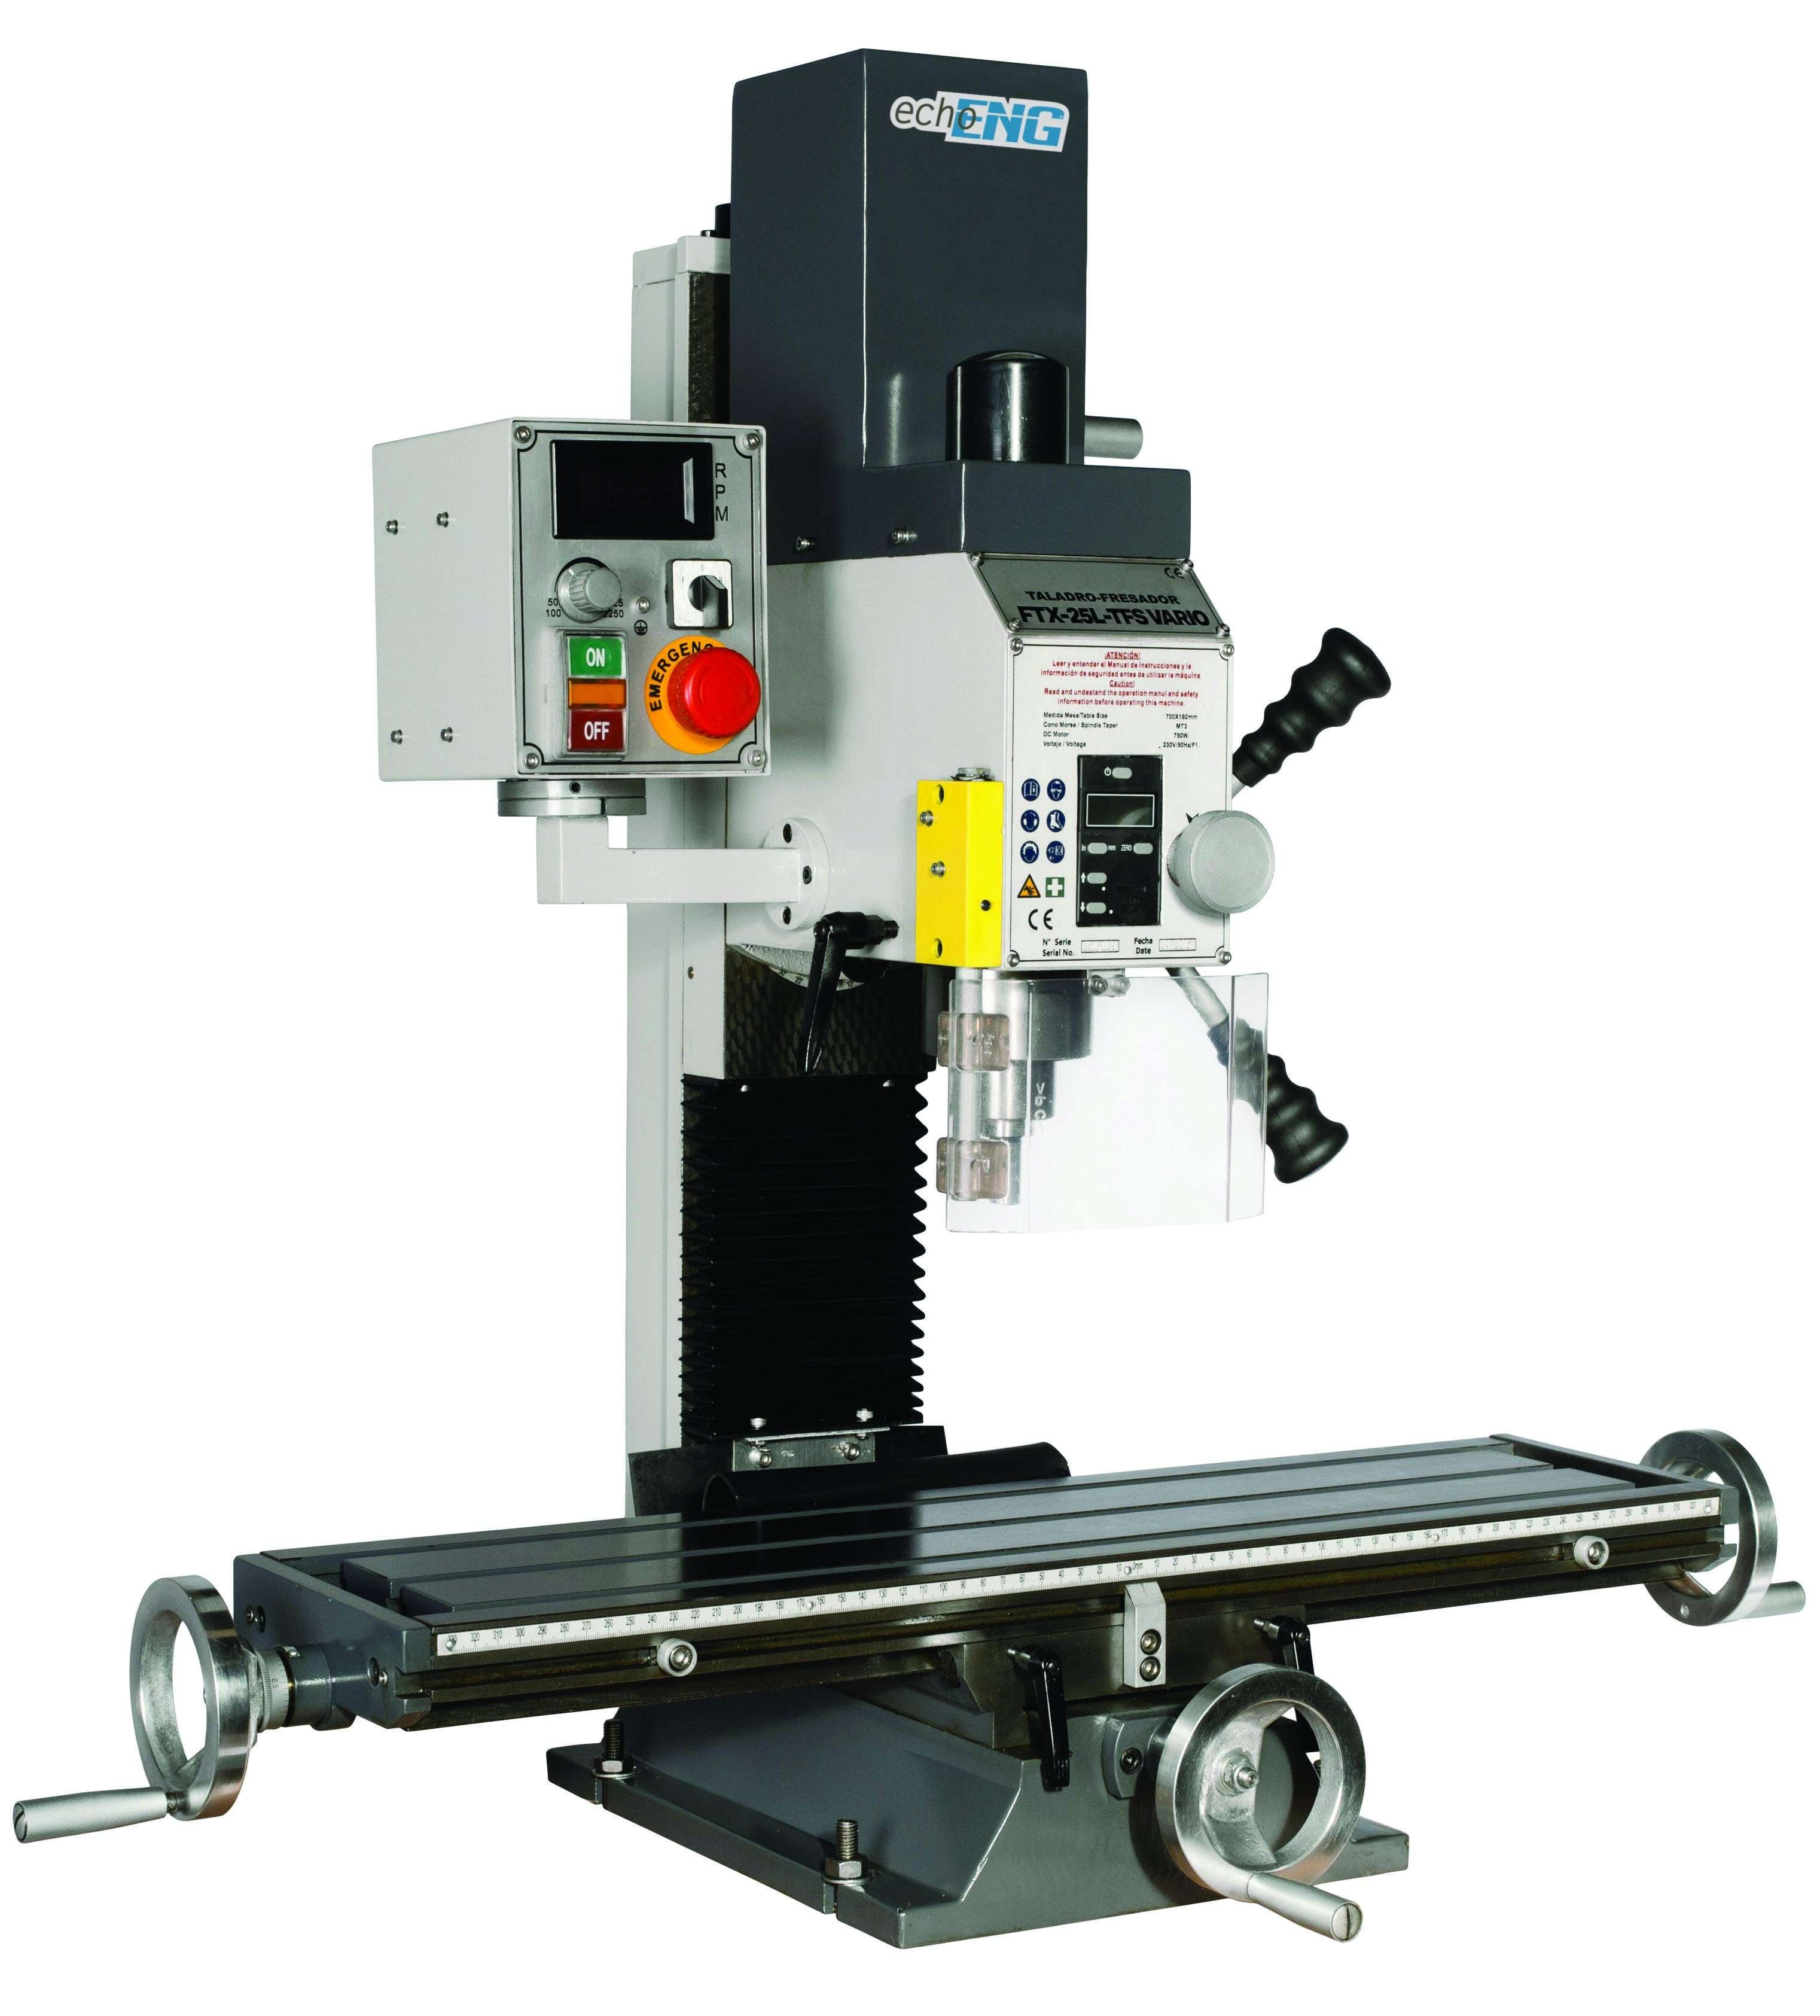 Milling-drilling machine FTX-32-TFS-VARIO bench type - echoENG